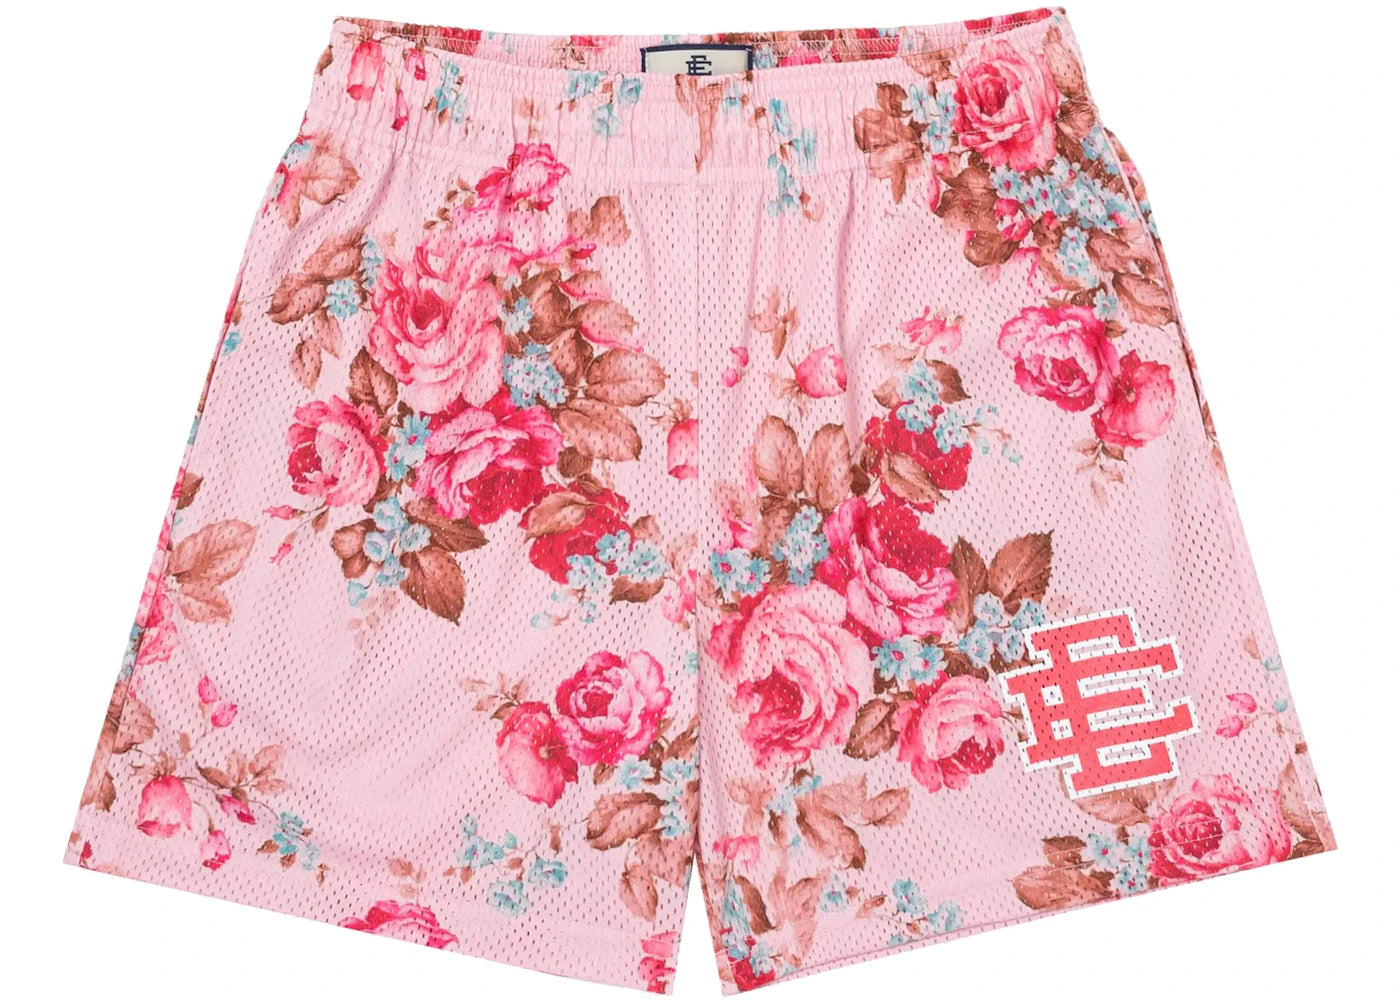 Eric Emanuel EE Basic Shorts Pink Floral Roses Mens Athletic Shorts Sizes Multiple Sizes